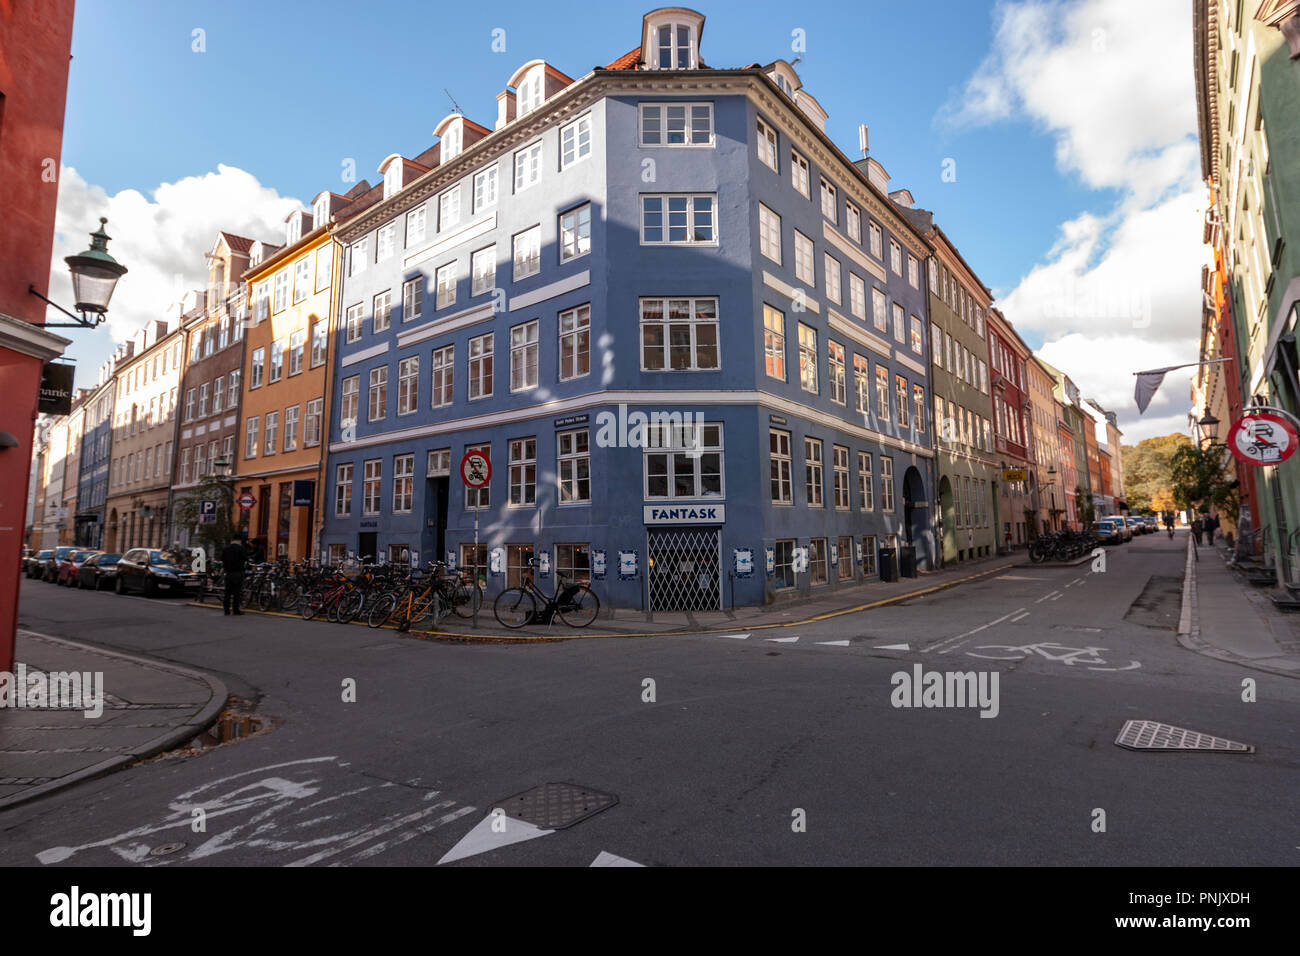 Fantask book store in Sankt Peders Stræde, Copenhagen, Denmark Stock Photo  - Alamy